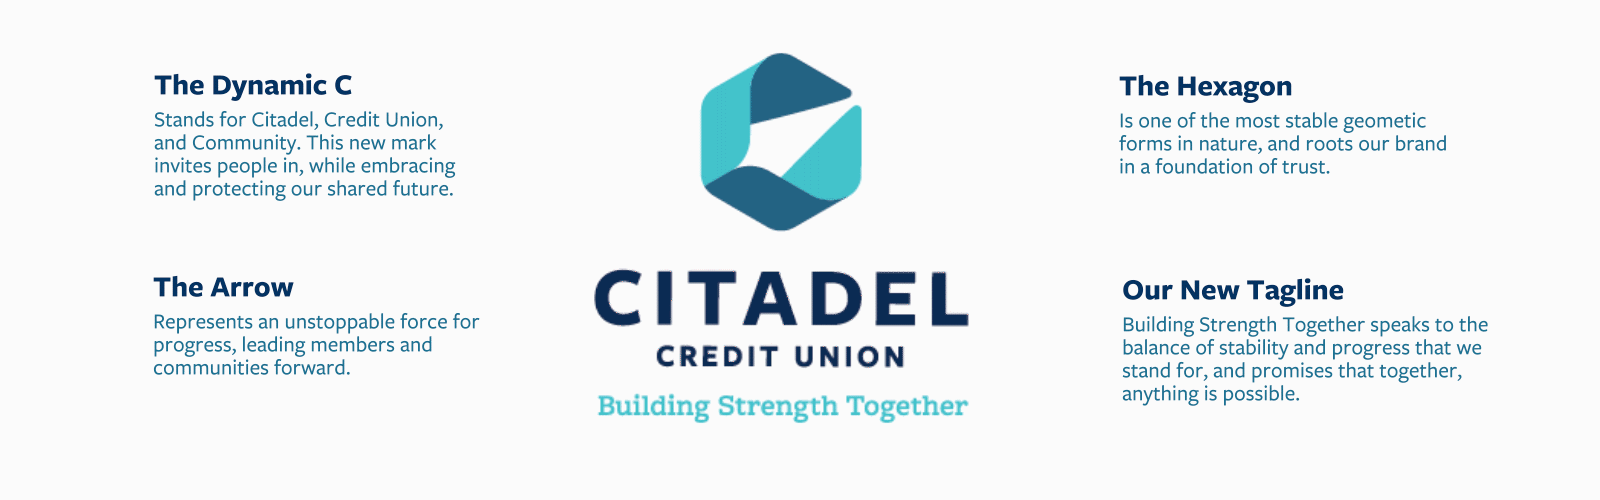 citadel credit union